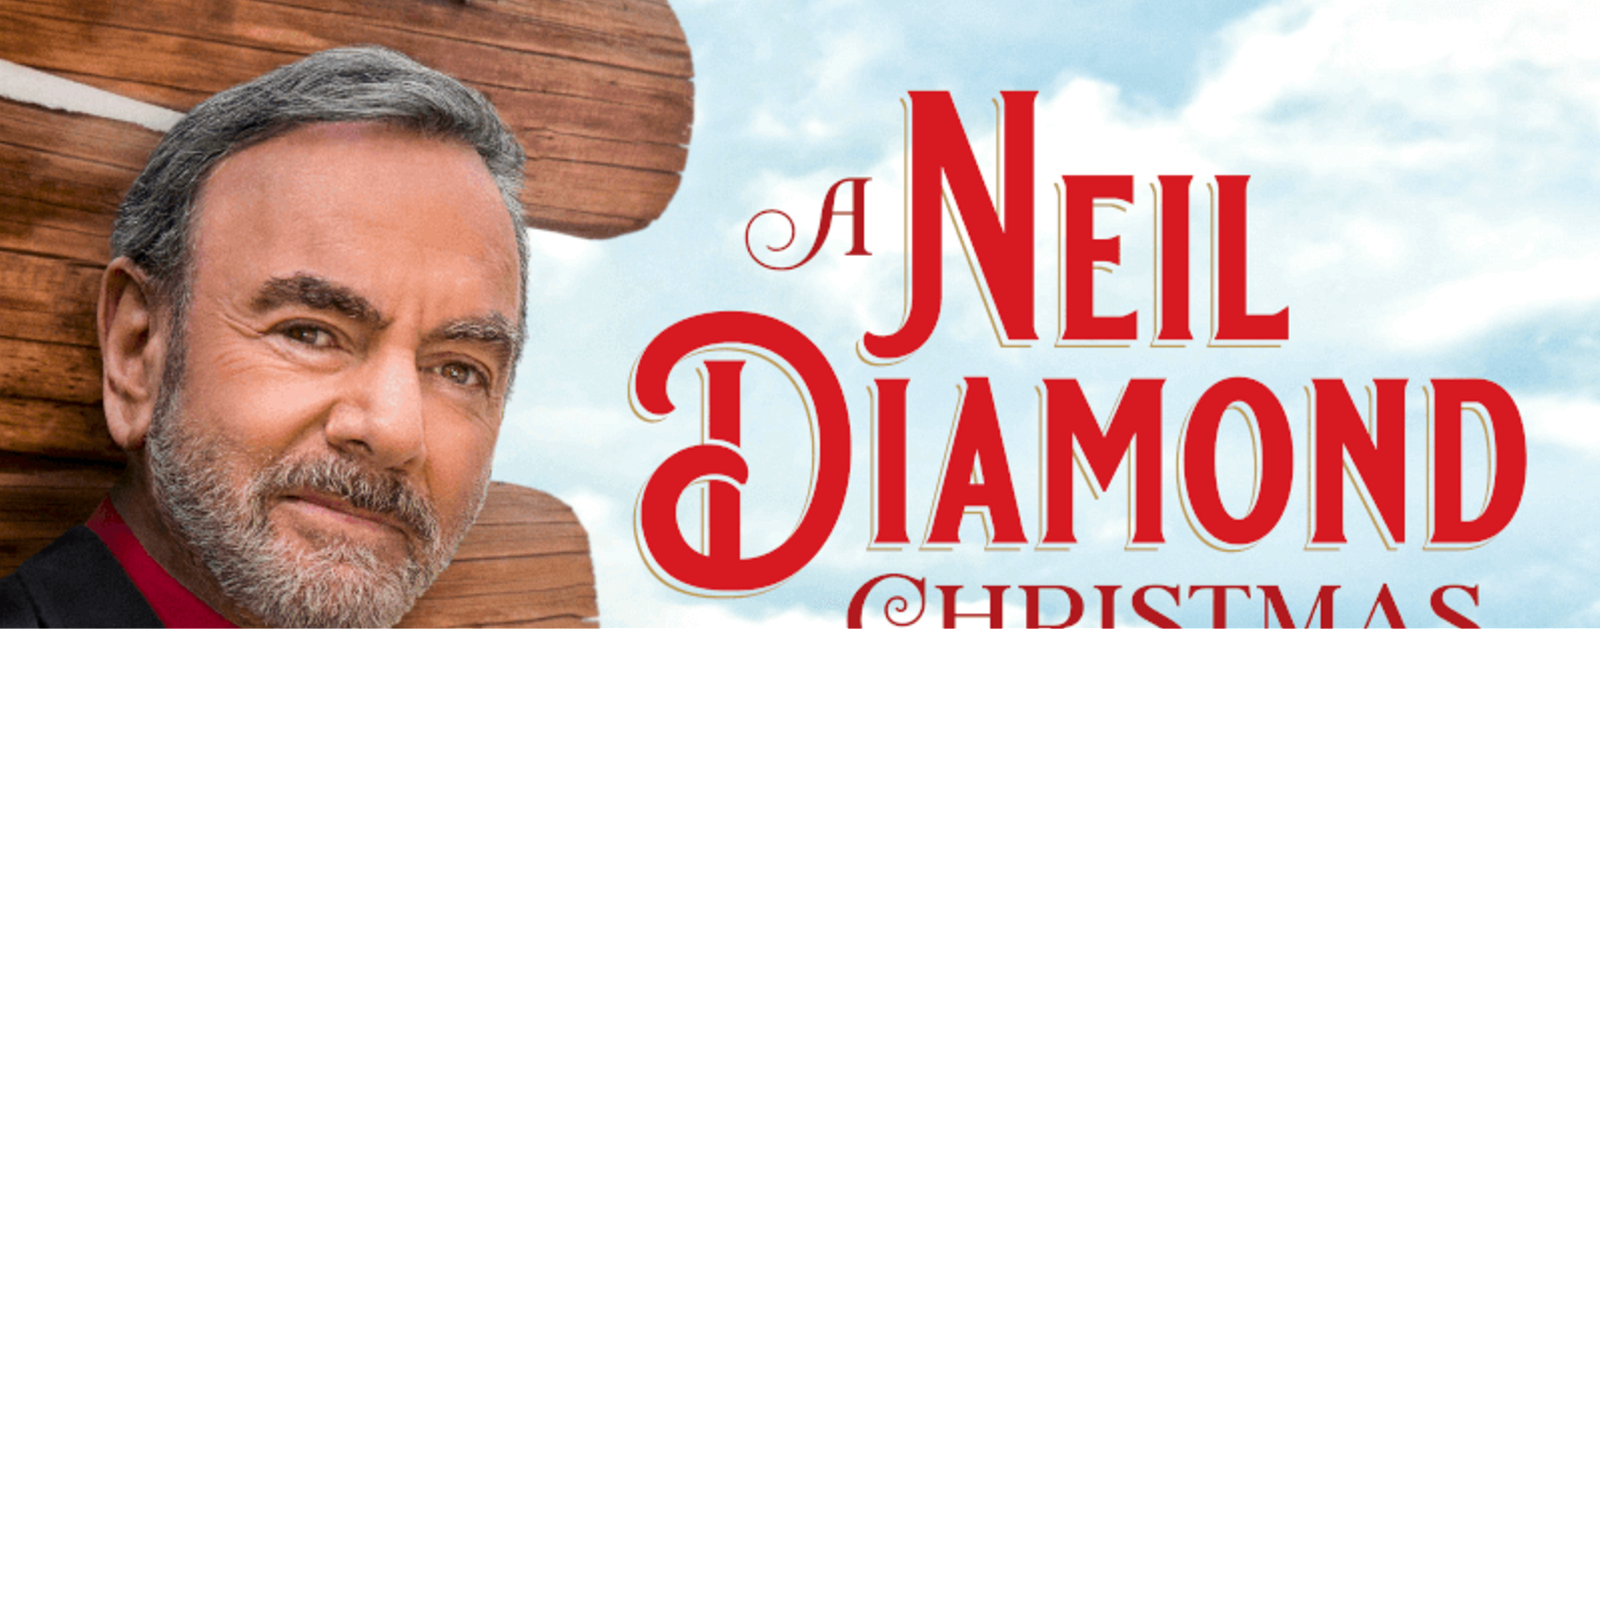 DIAMOND NEIL - A Neil Diamond Christmas, Vinyl